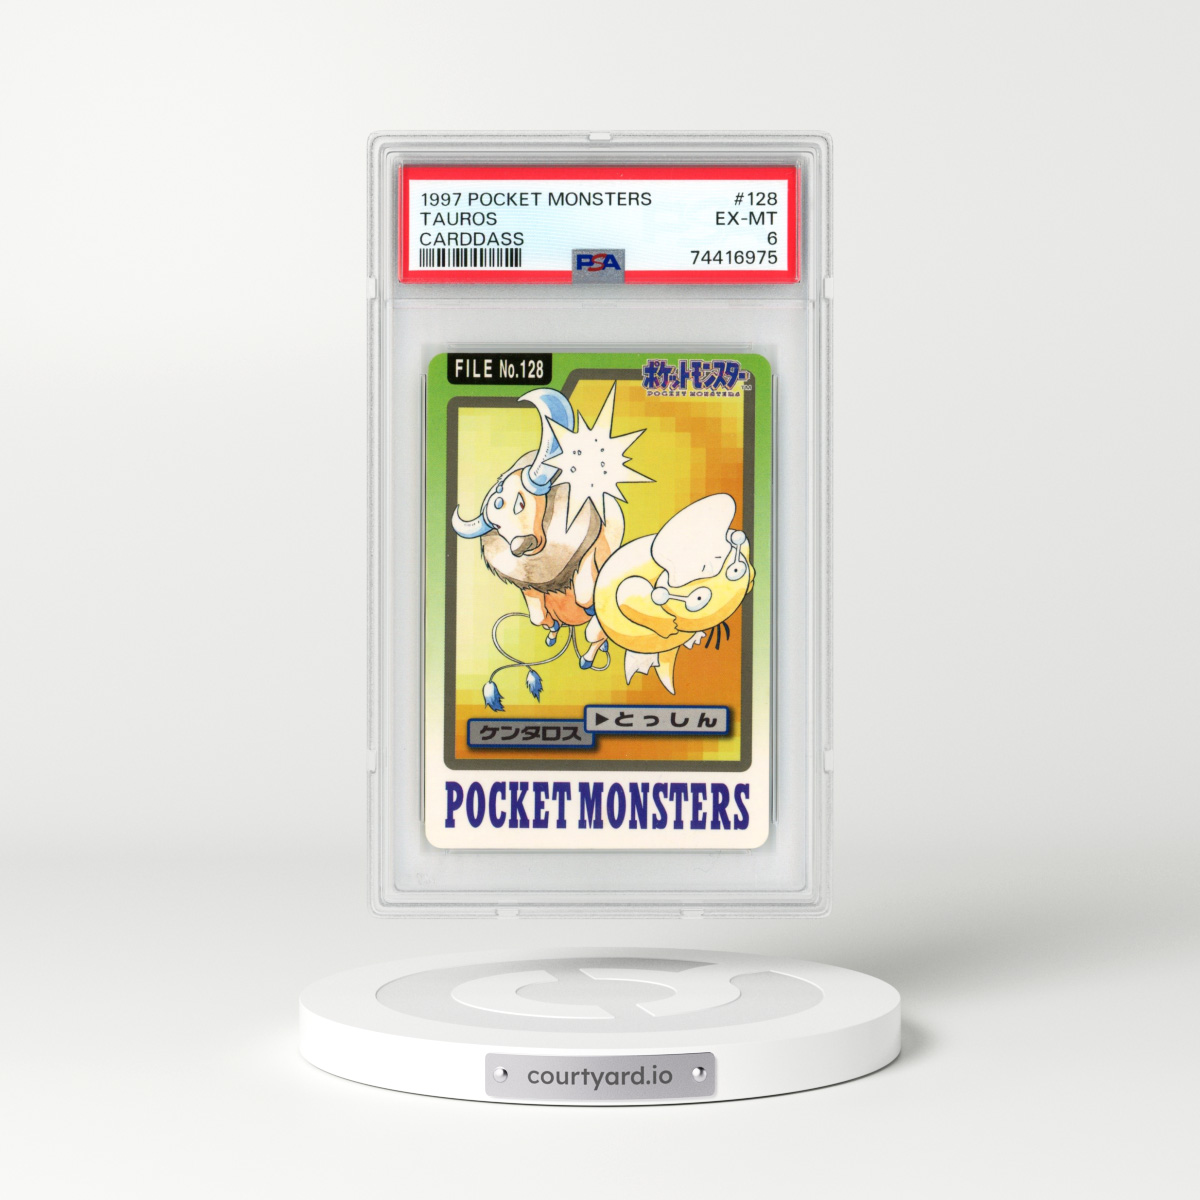 Aerodactyl V #56 Pokemon Japanese Lost Abyss - PSA 10 – Card Boyz